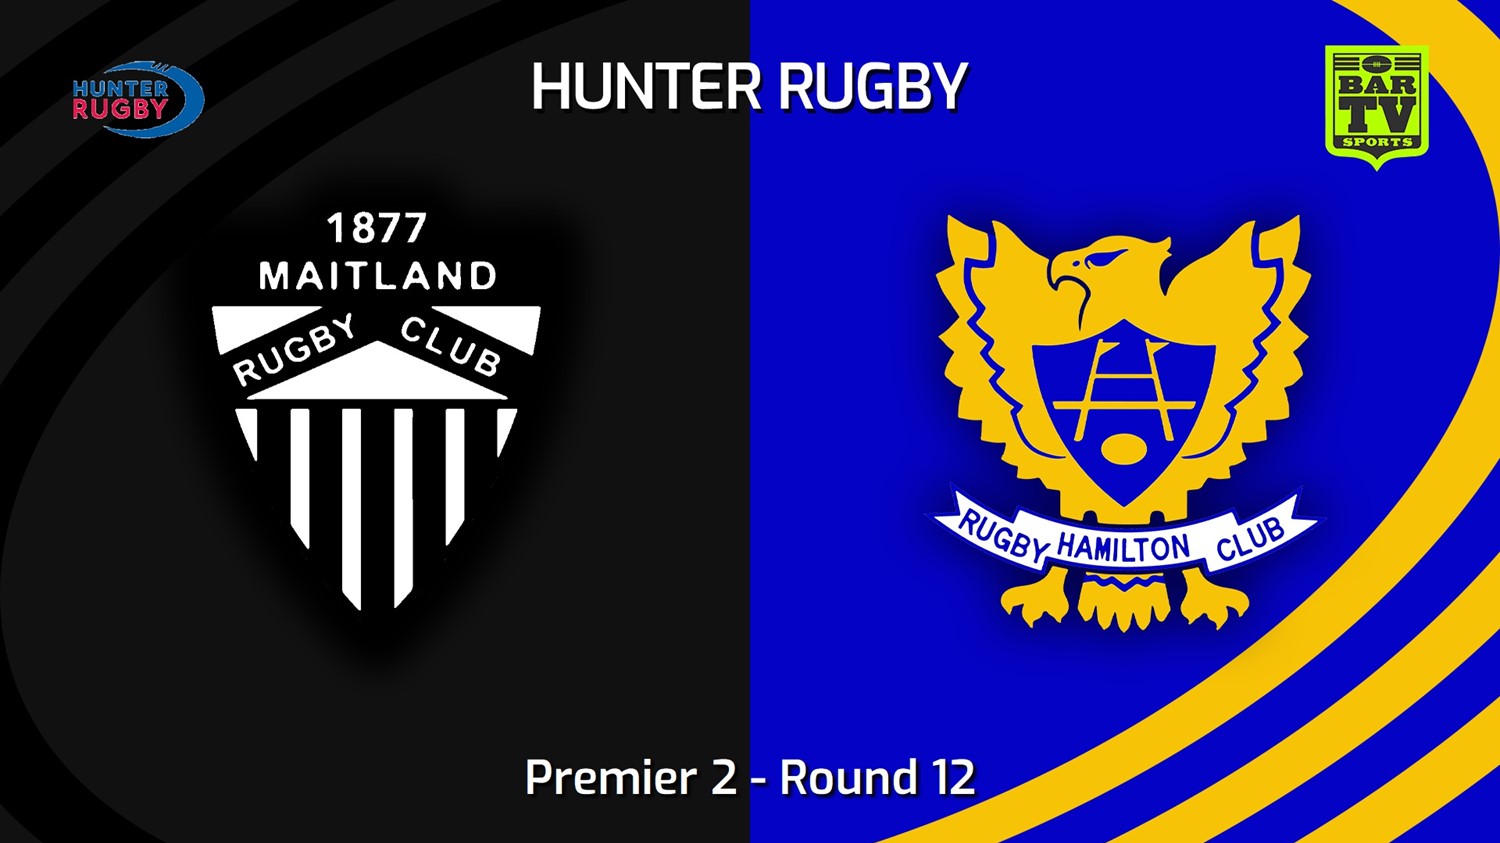 230708-Hunter Rugby Round 12 - Premier 2 - Maitland v Hamilton Hawks Slate Image